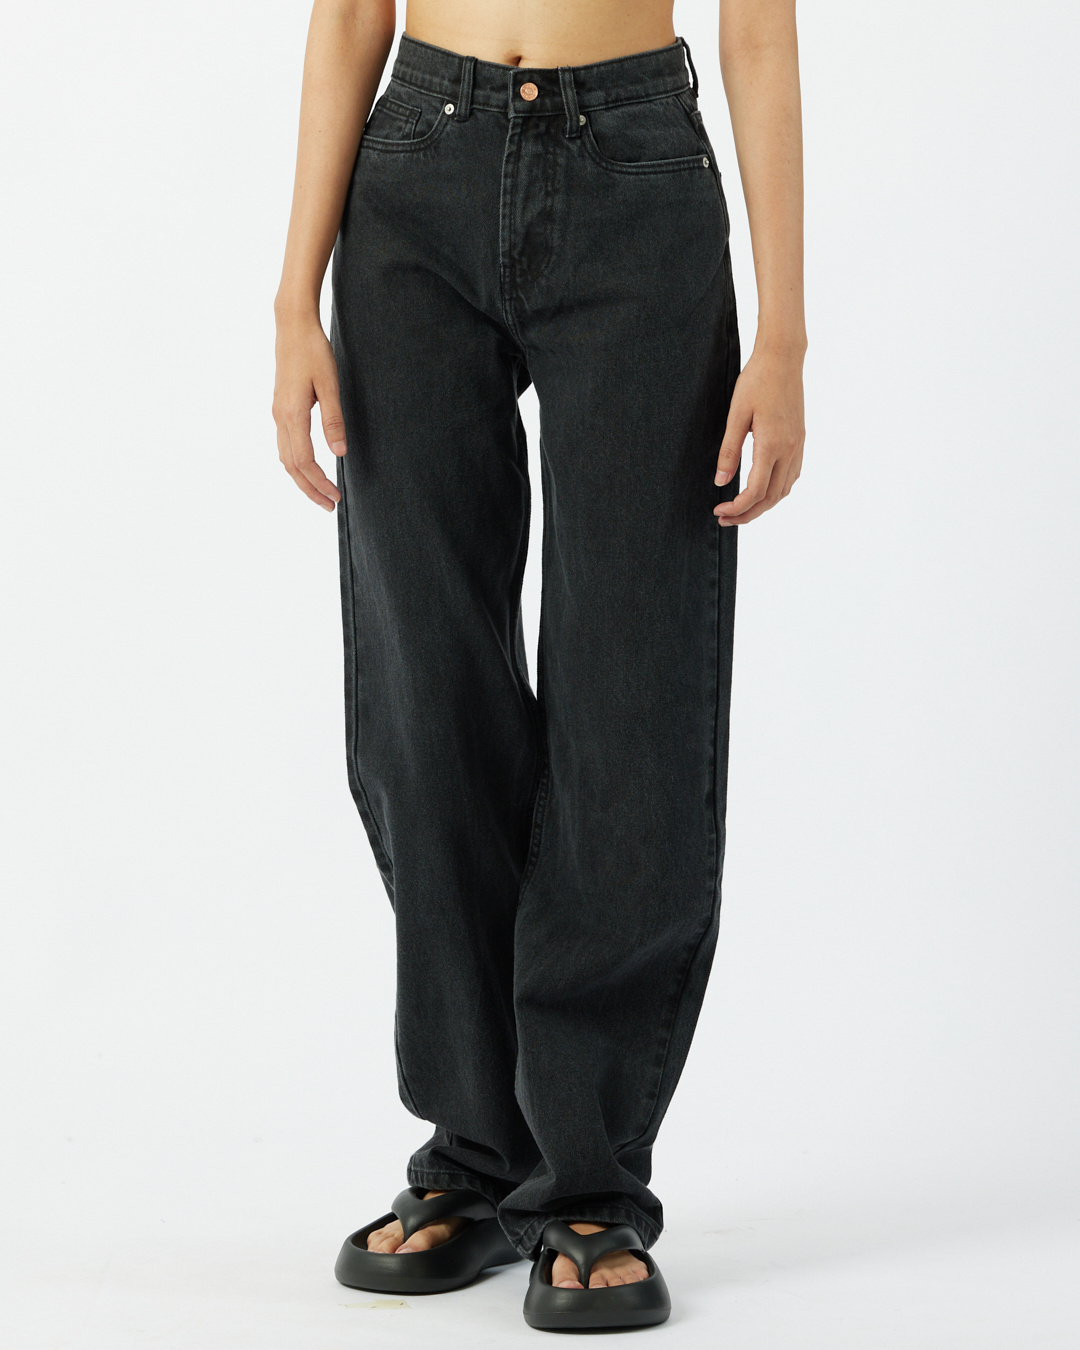 Buy Women's Black Loose Comfort Fit Jeans Online at Bewakoof